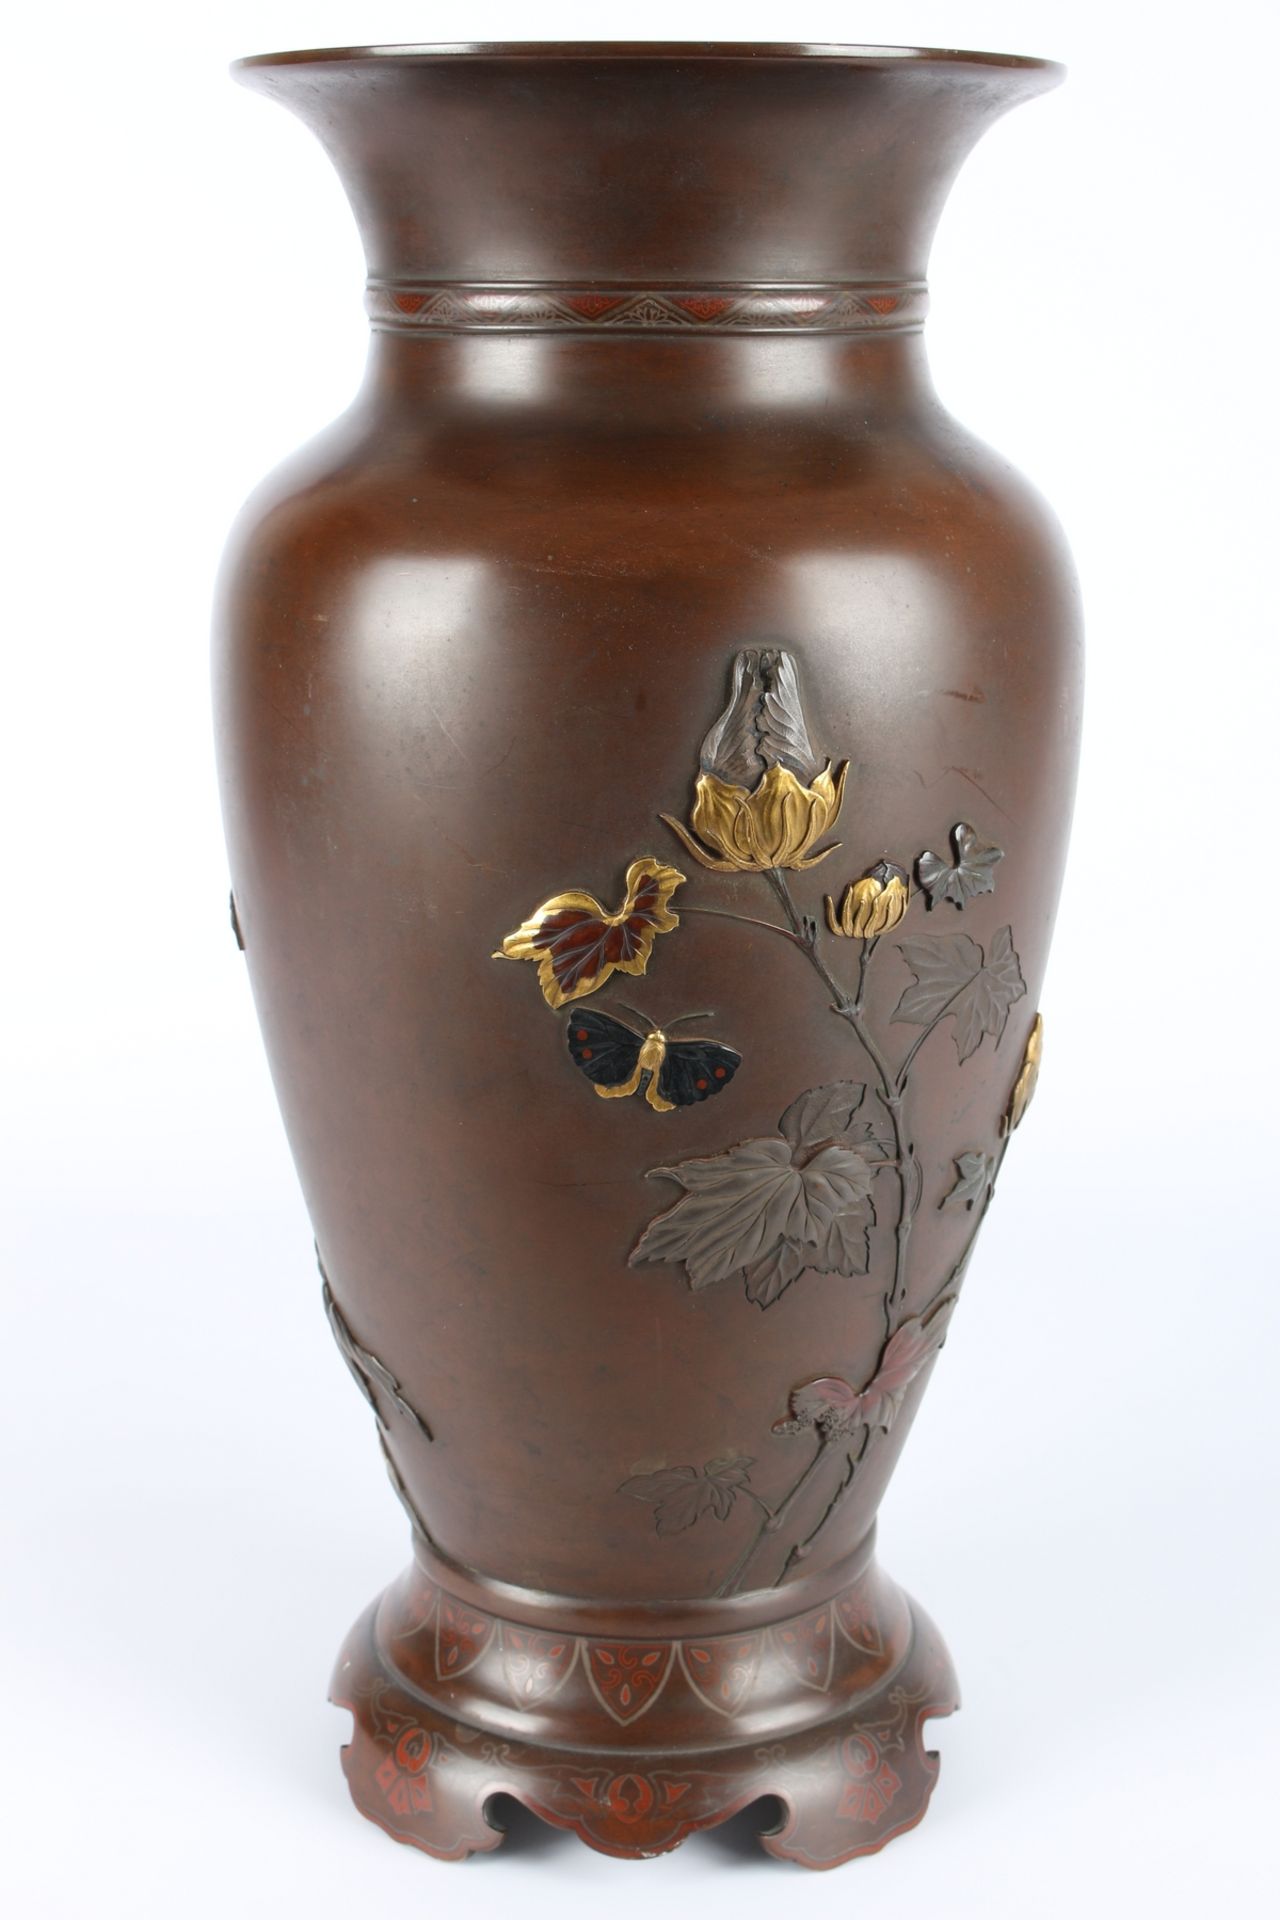 Japan Bronze Vase, Meiji-Period (1868-1912) japanese vase, - Image 3 of 7